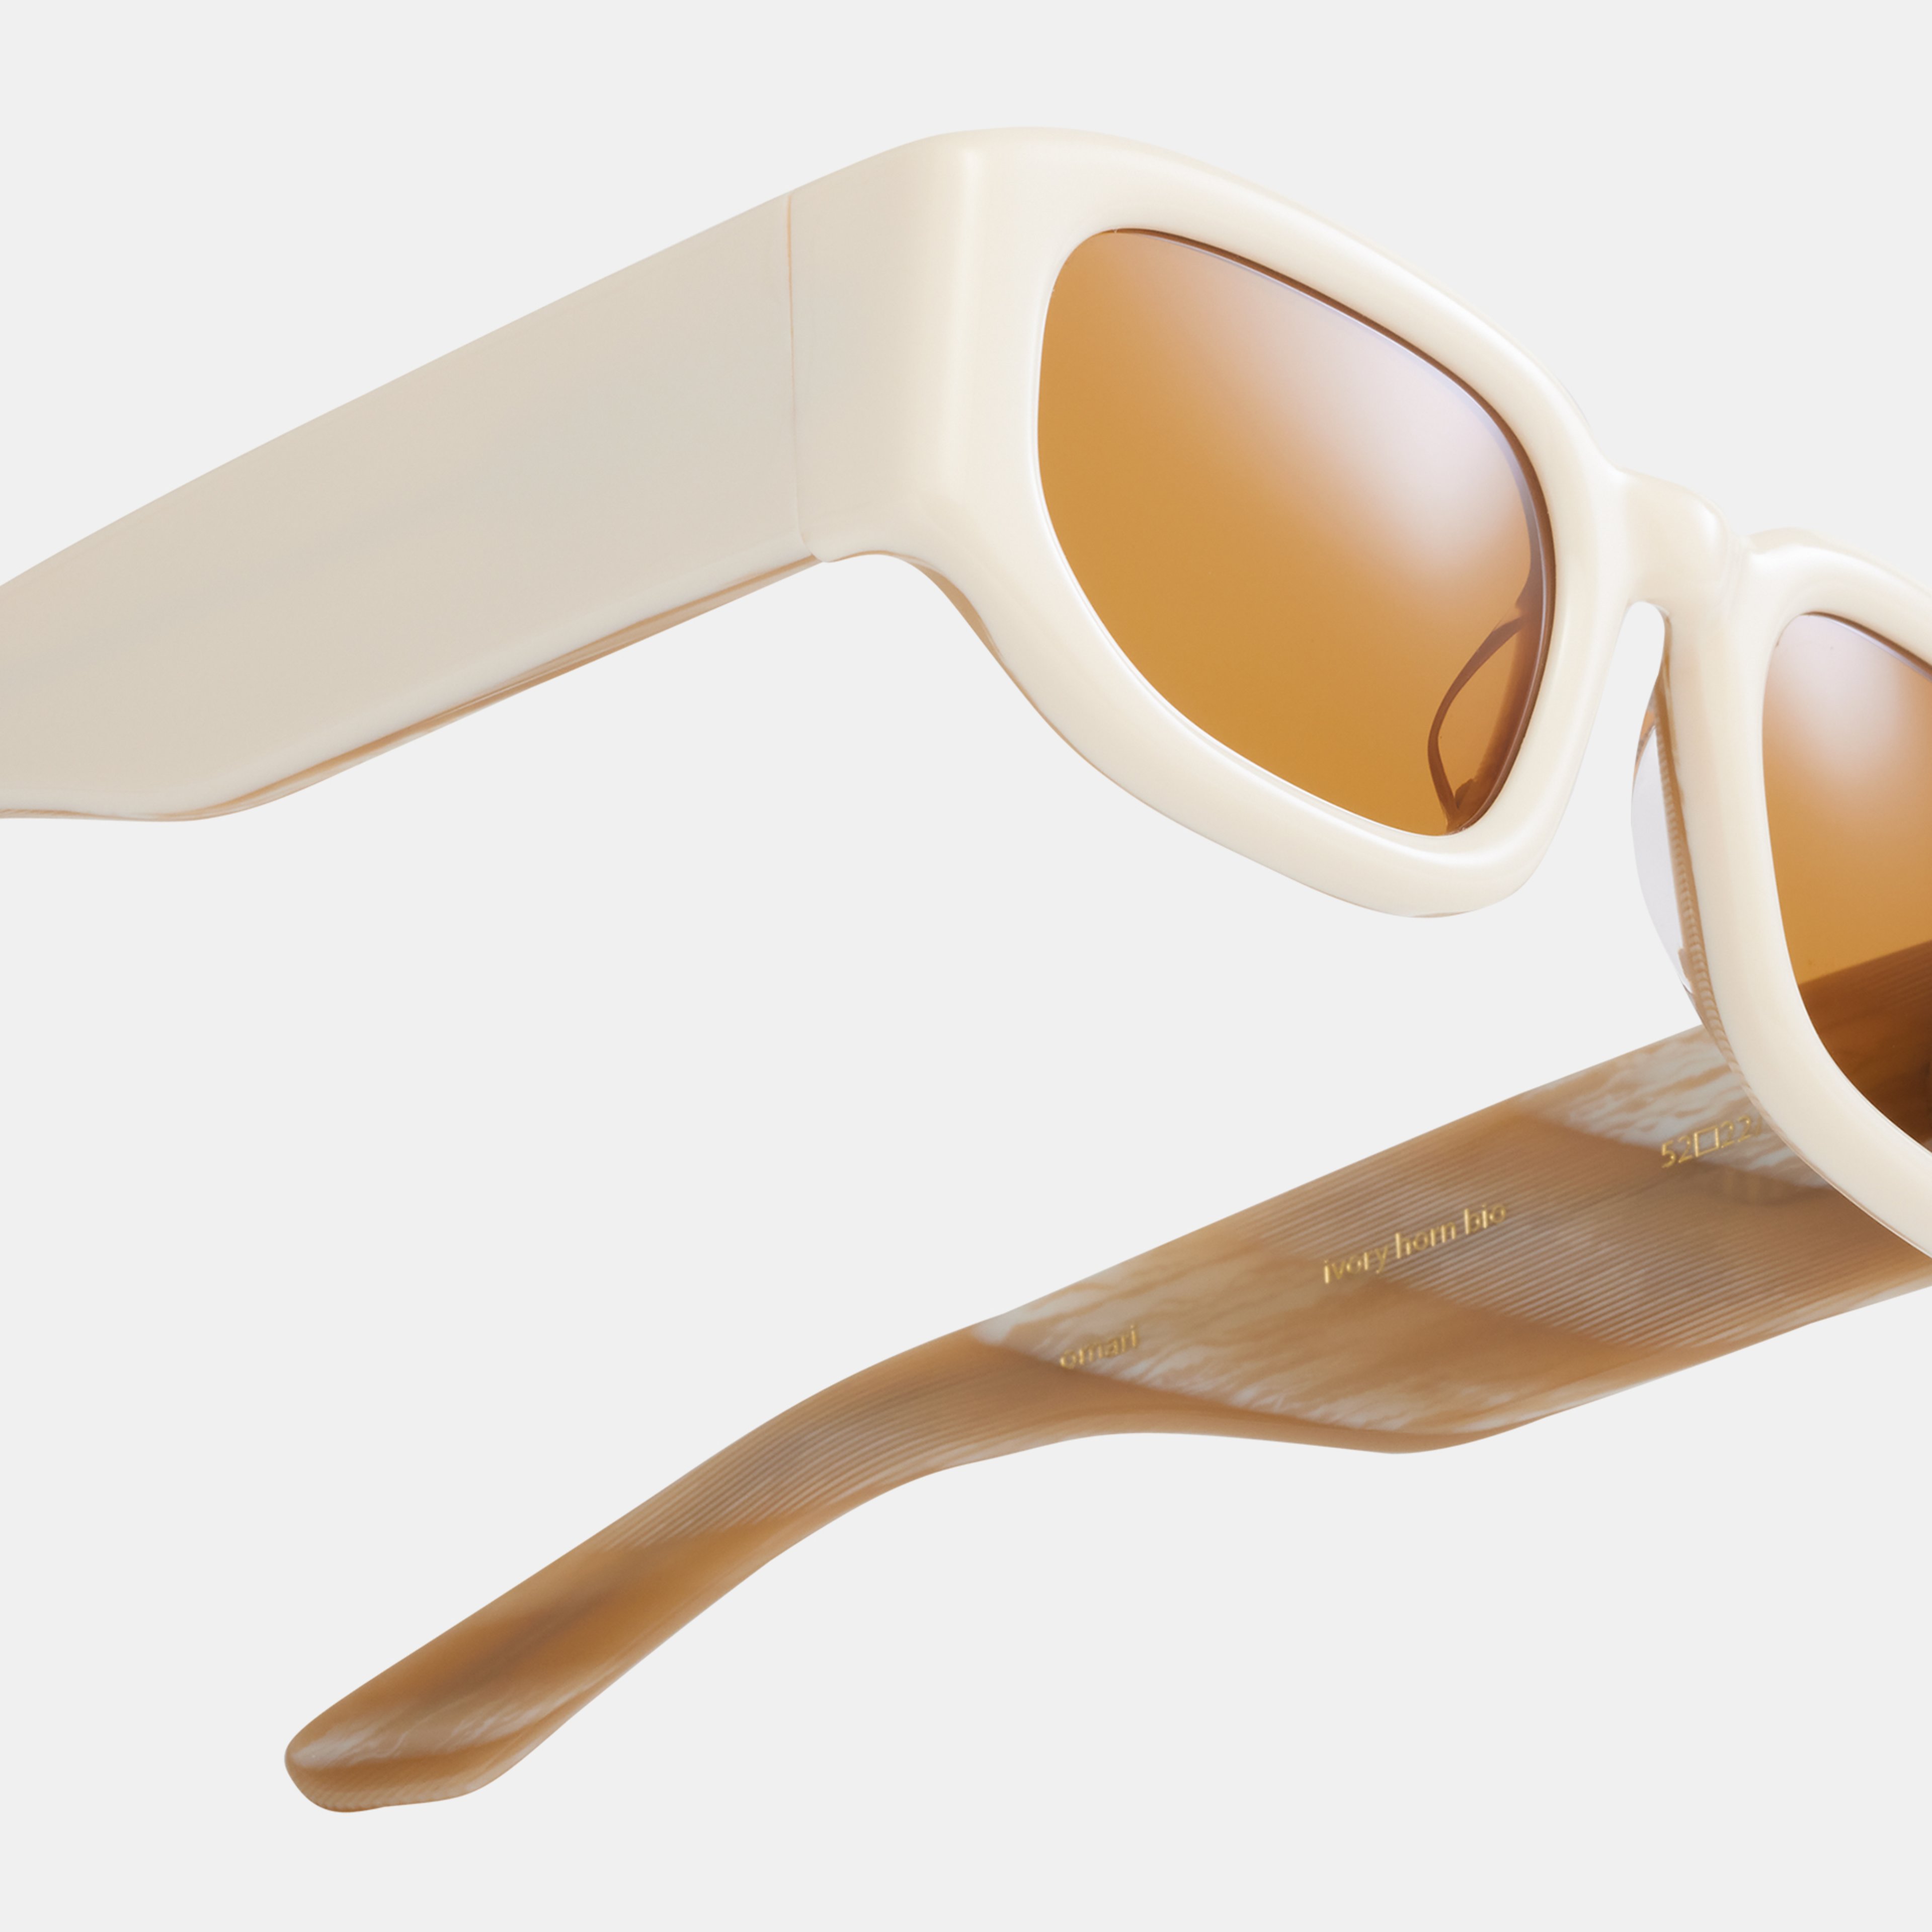 Ace & Tate Gafas de sol | rectangulares Acetato bío in Blanco